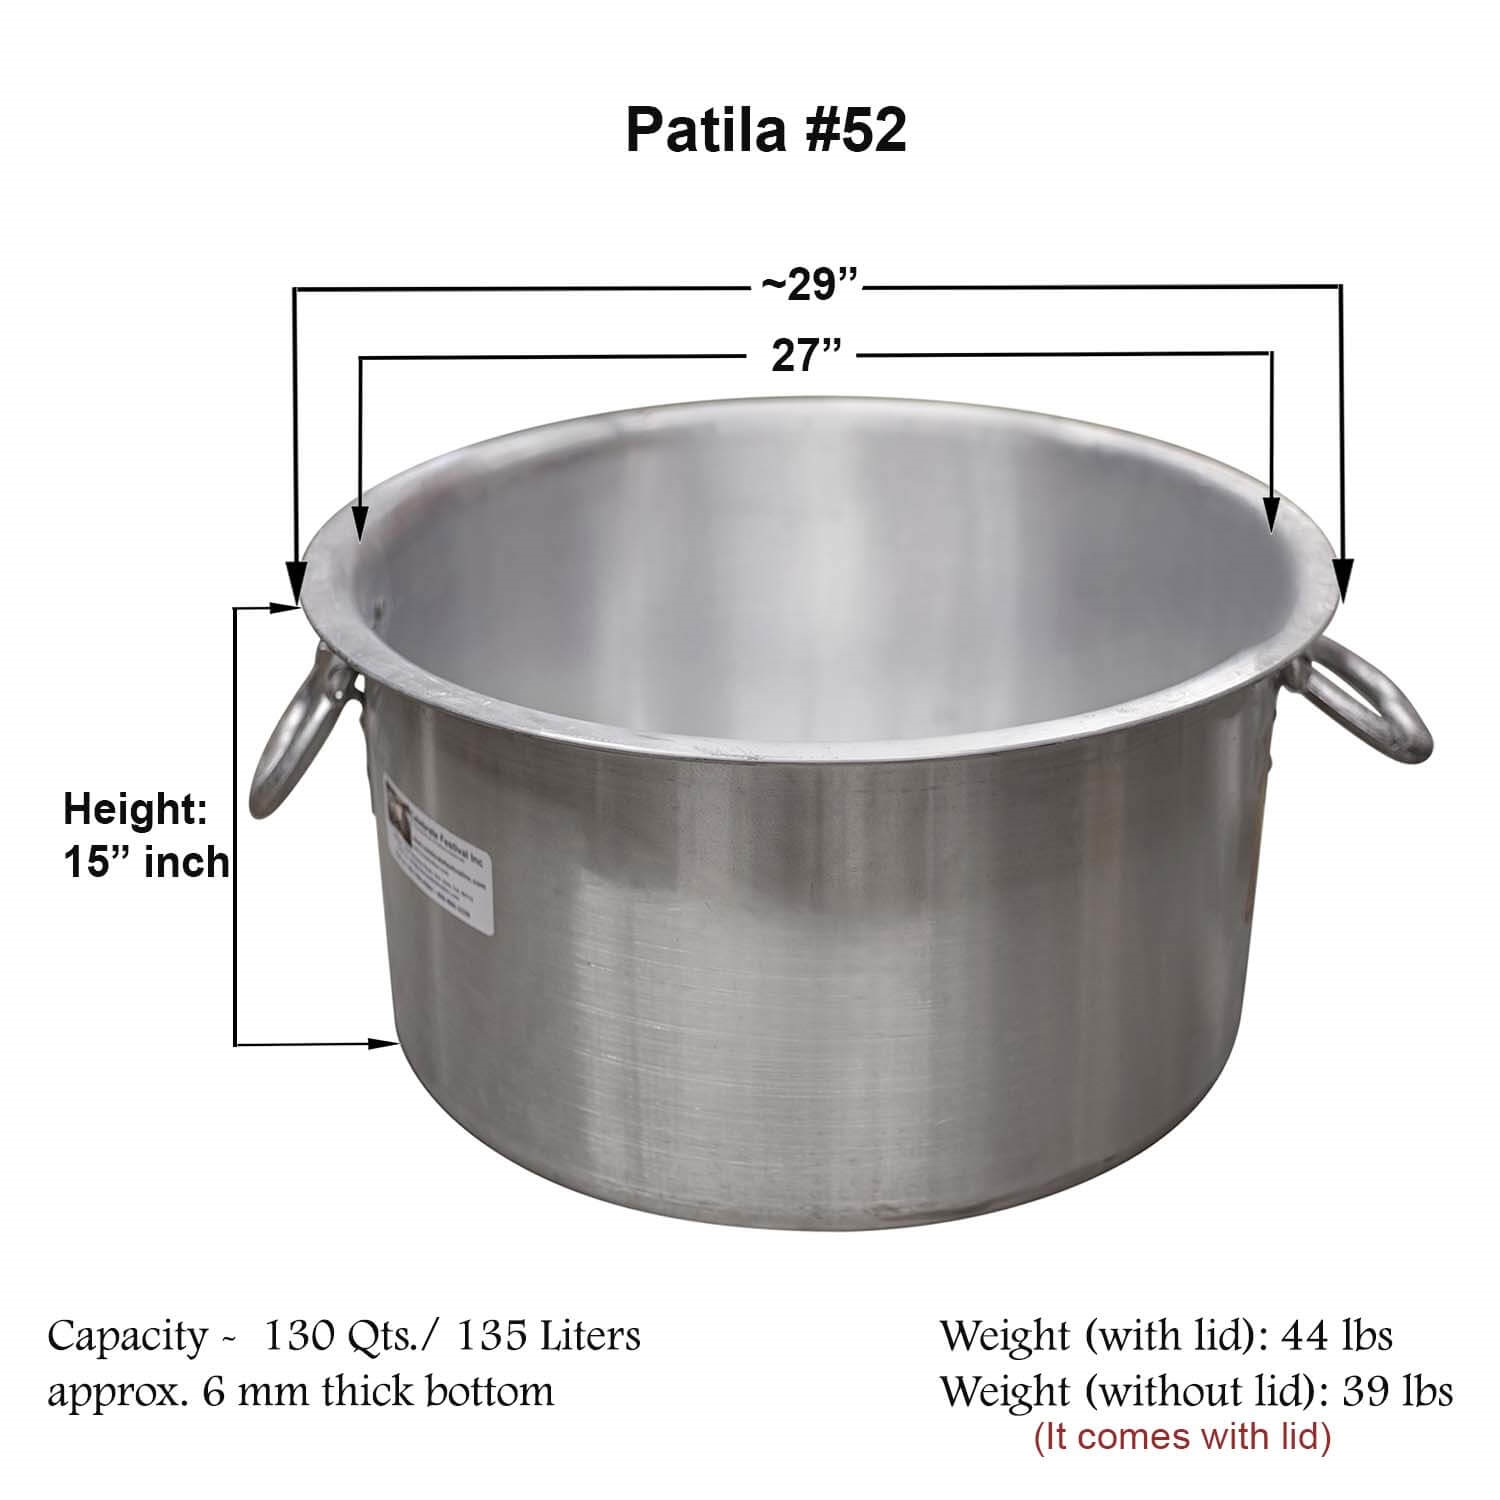 Indian Restaurant style Aluminum Sauce Pots (Patila) # 48 — Nishi